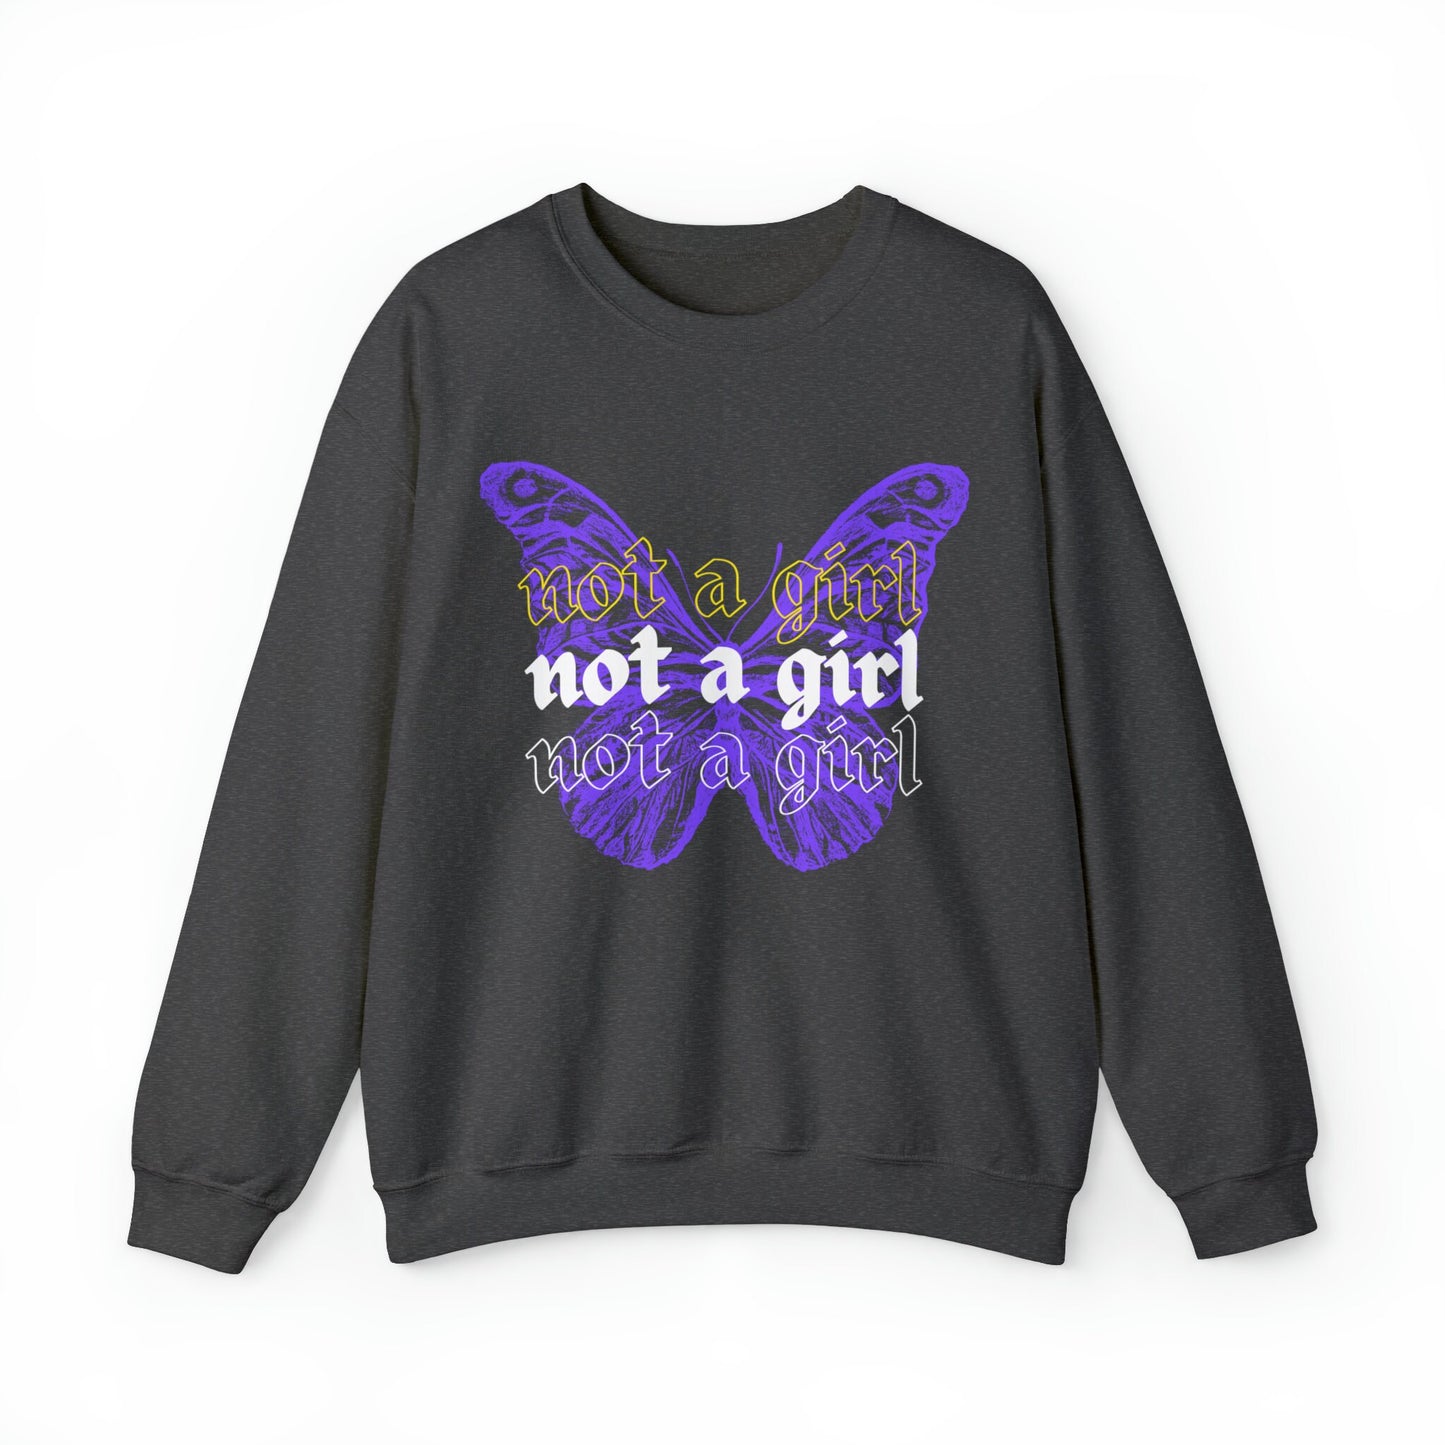 Not a girl sweatshirt